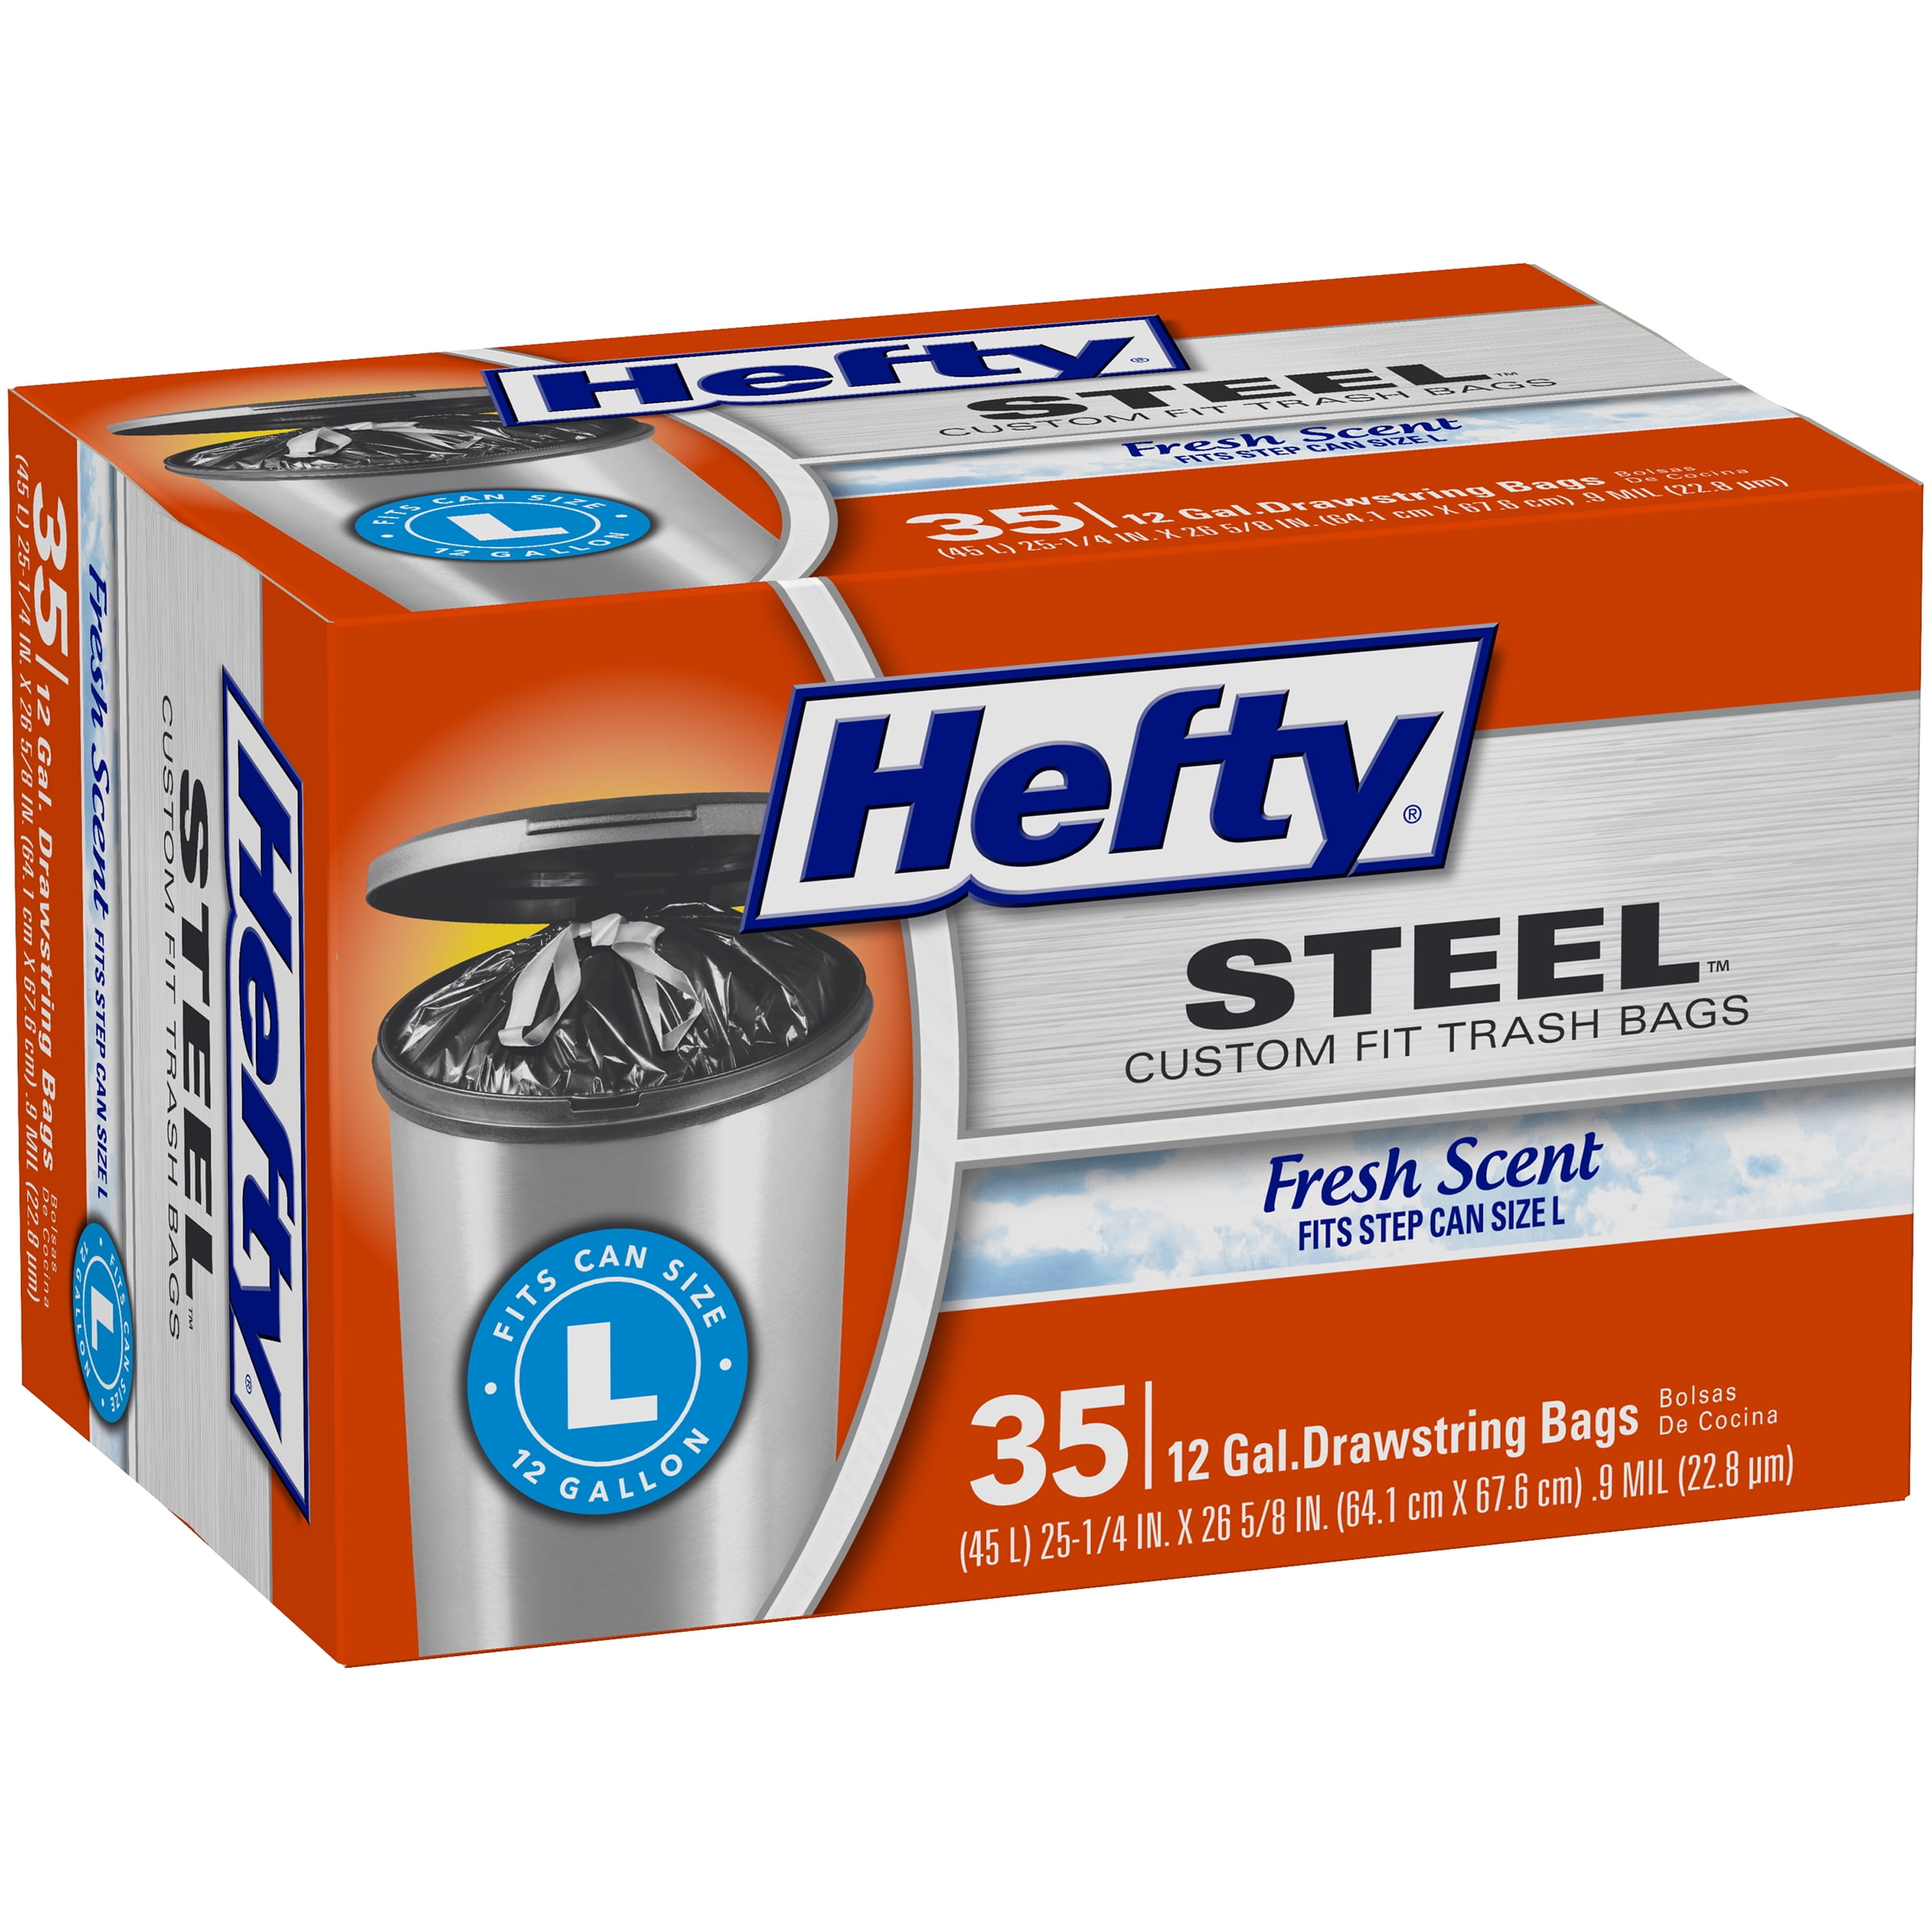 Hefty® Steel Size L 12 Gallon Fresh Scent Drawstring Custom Fit Trash Bags,  35 ct Box